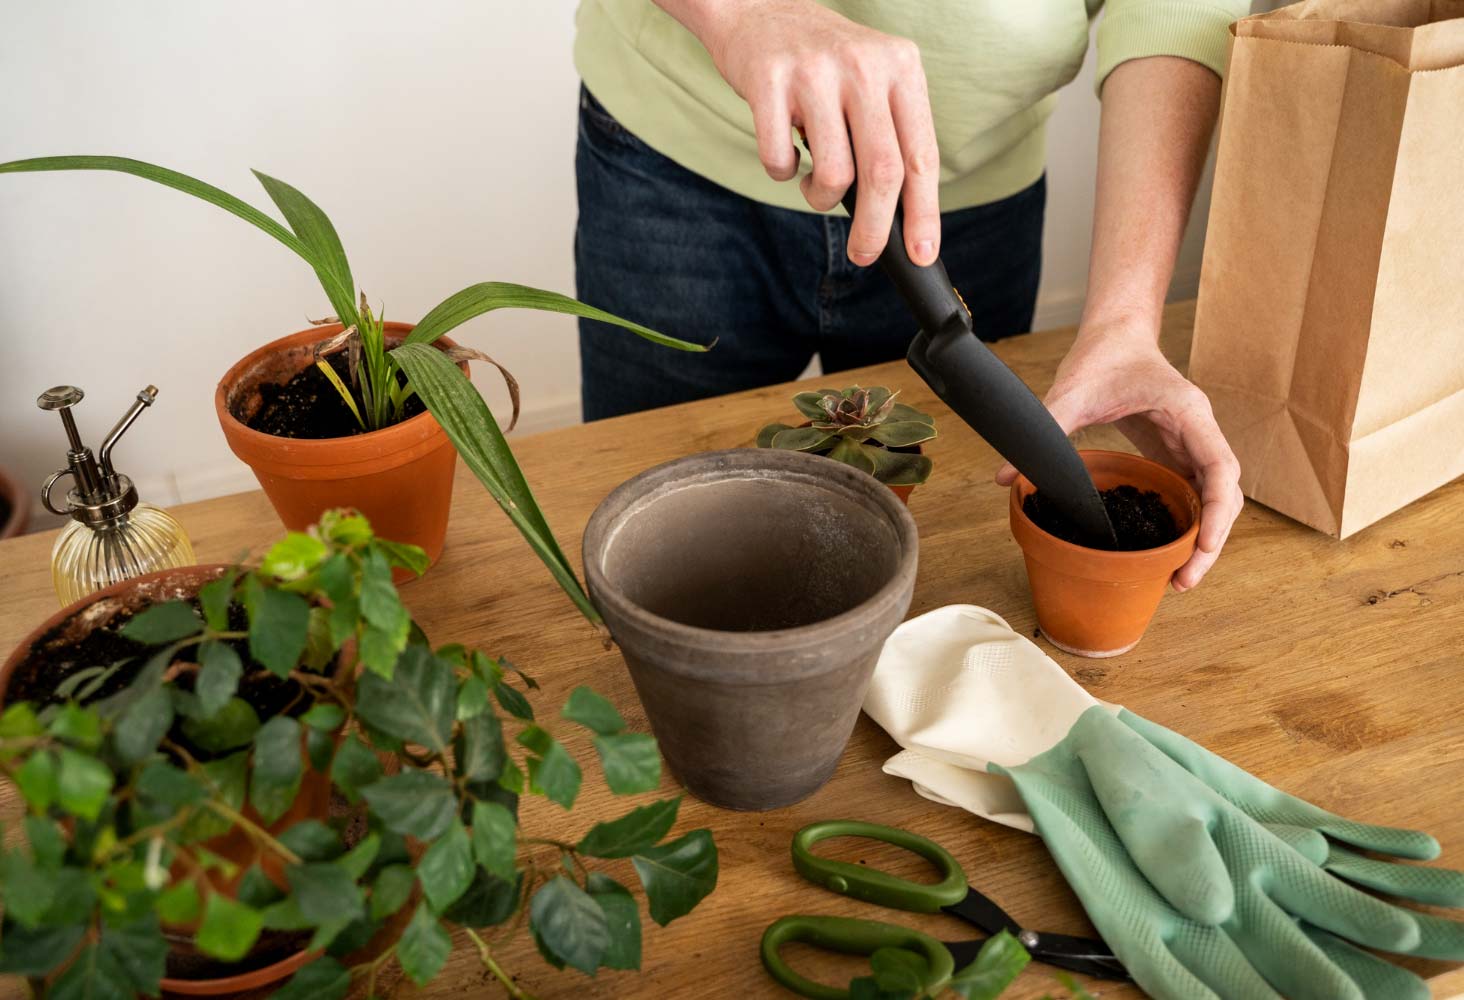 Person transplanting plants into new pots